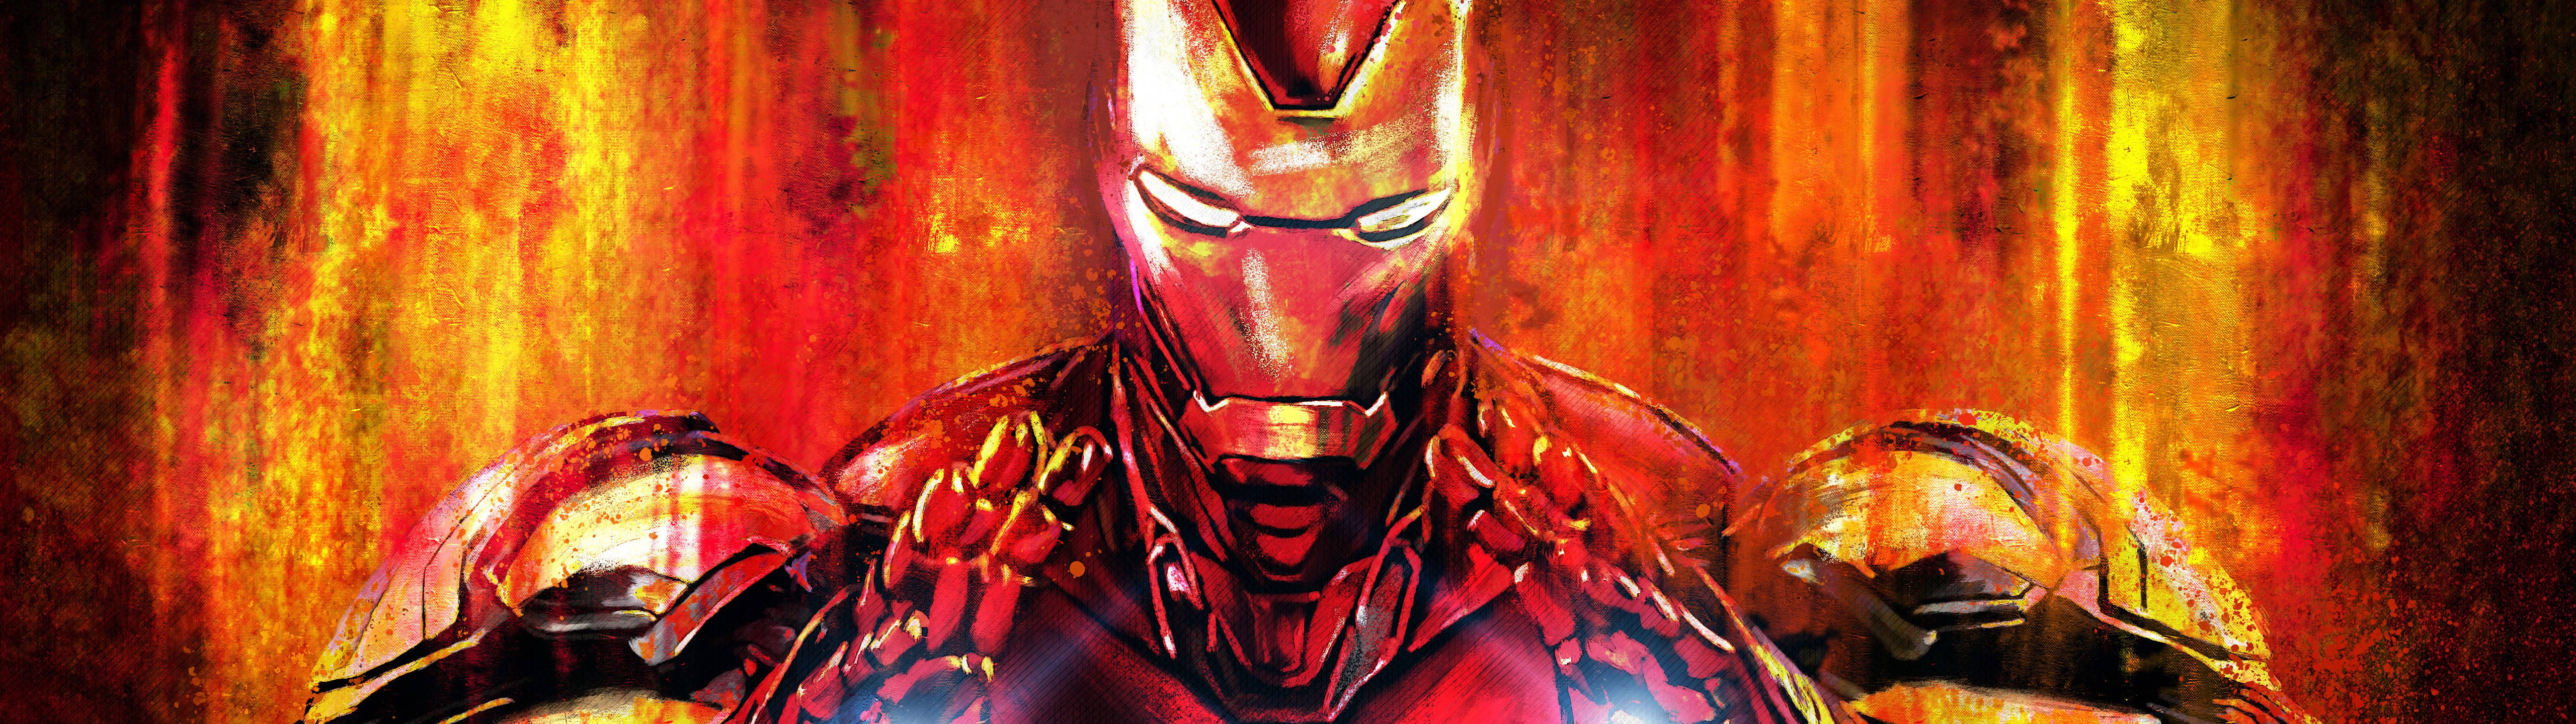 Marvel's Ironman Art 5120 X 1440